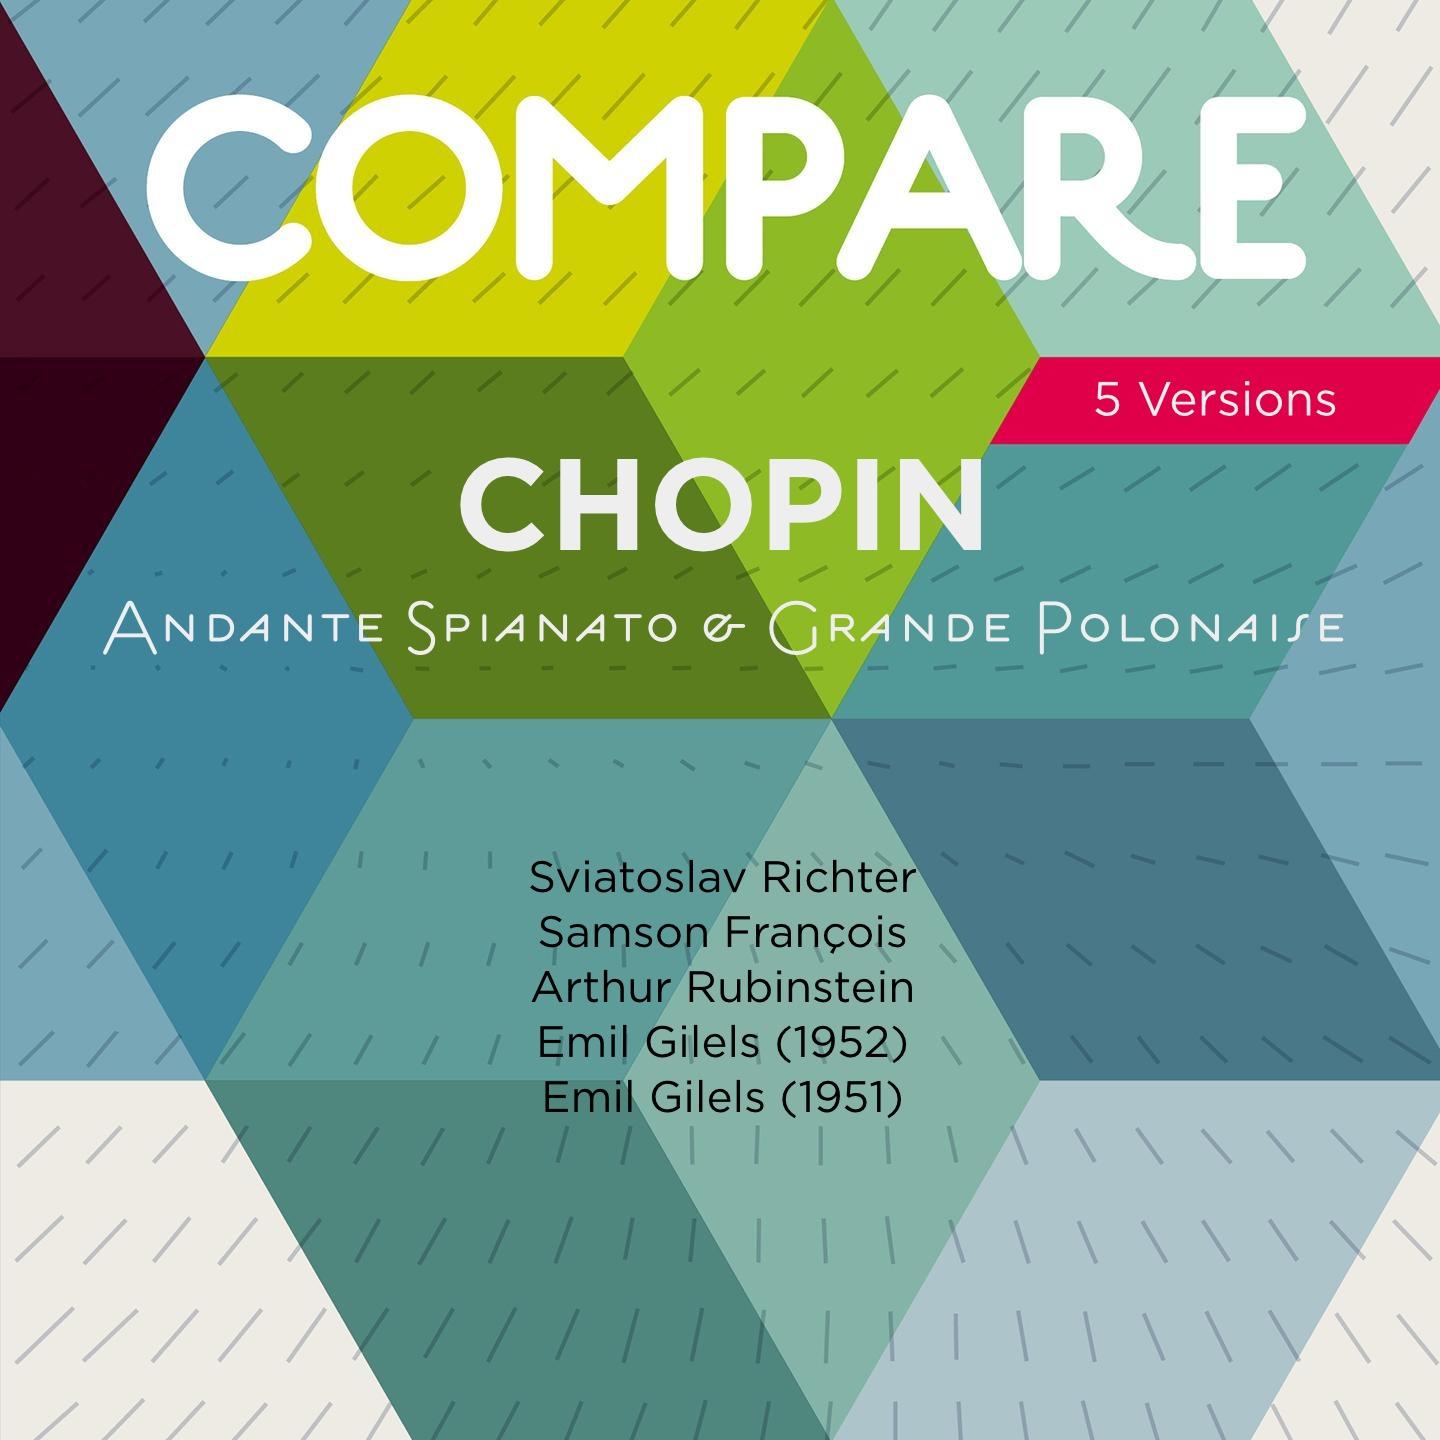 Chopin: Andante spianato et grande polonaise brillante, Sviatoslav Richter vs. Samson Fran ois vs. Arthur Rubinstein vs. Emil Gilels Compare 5 Versions